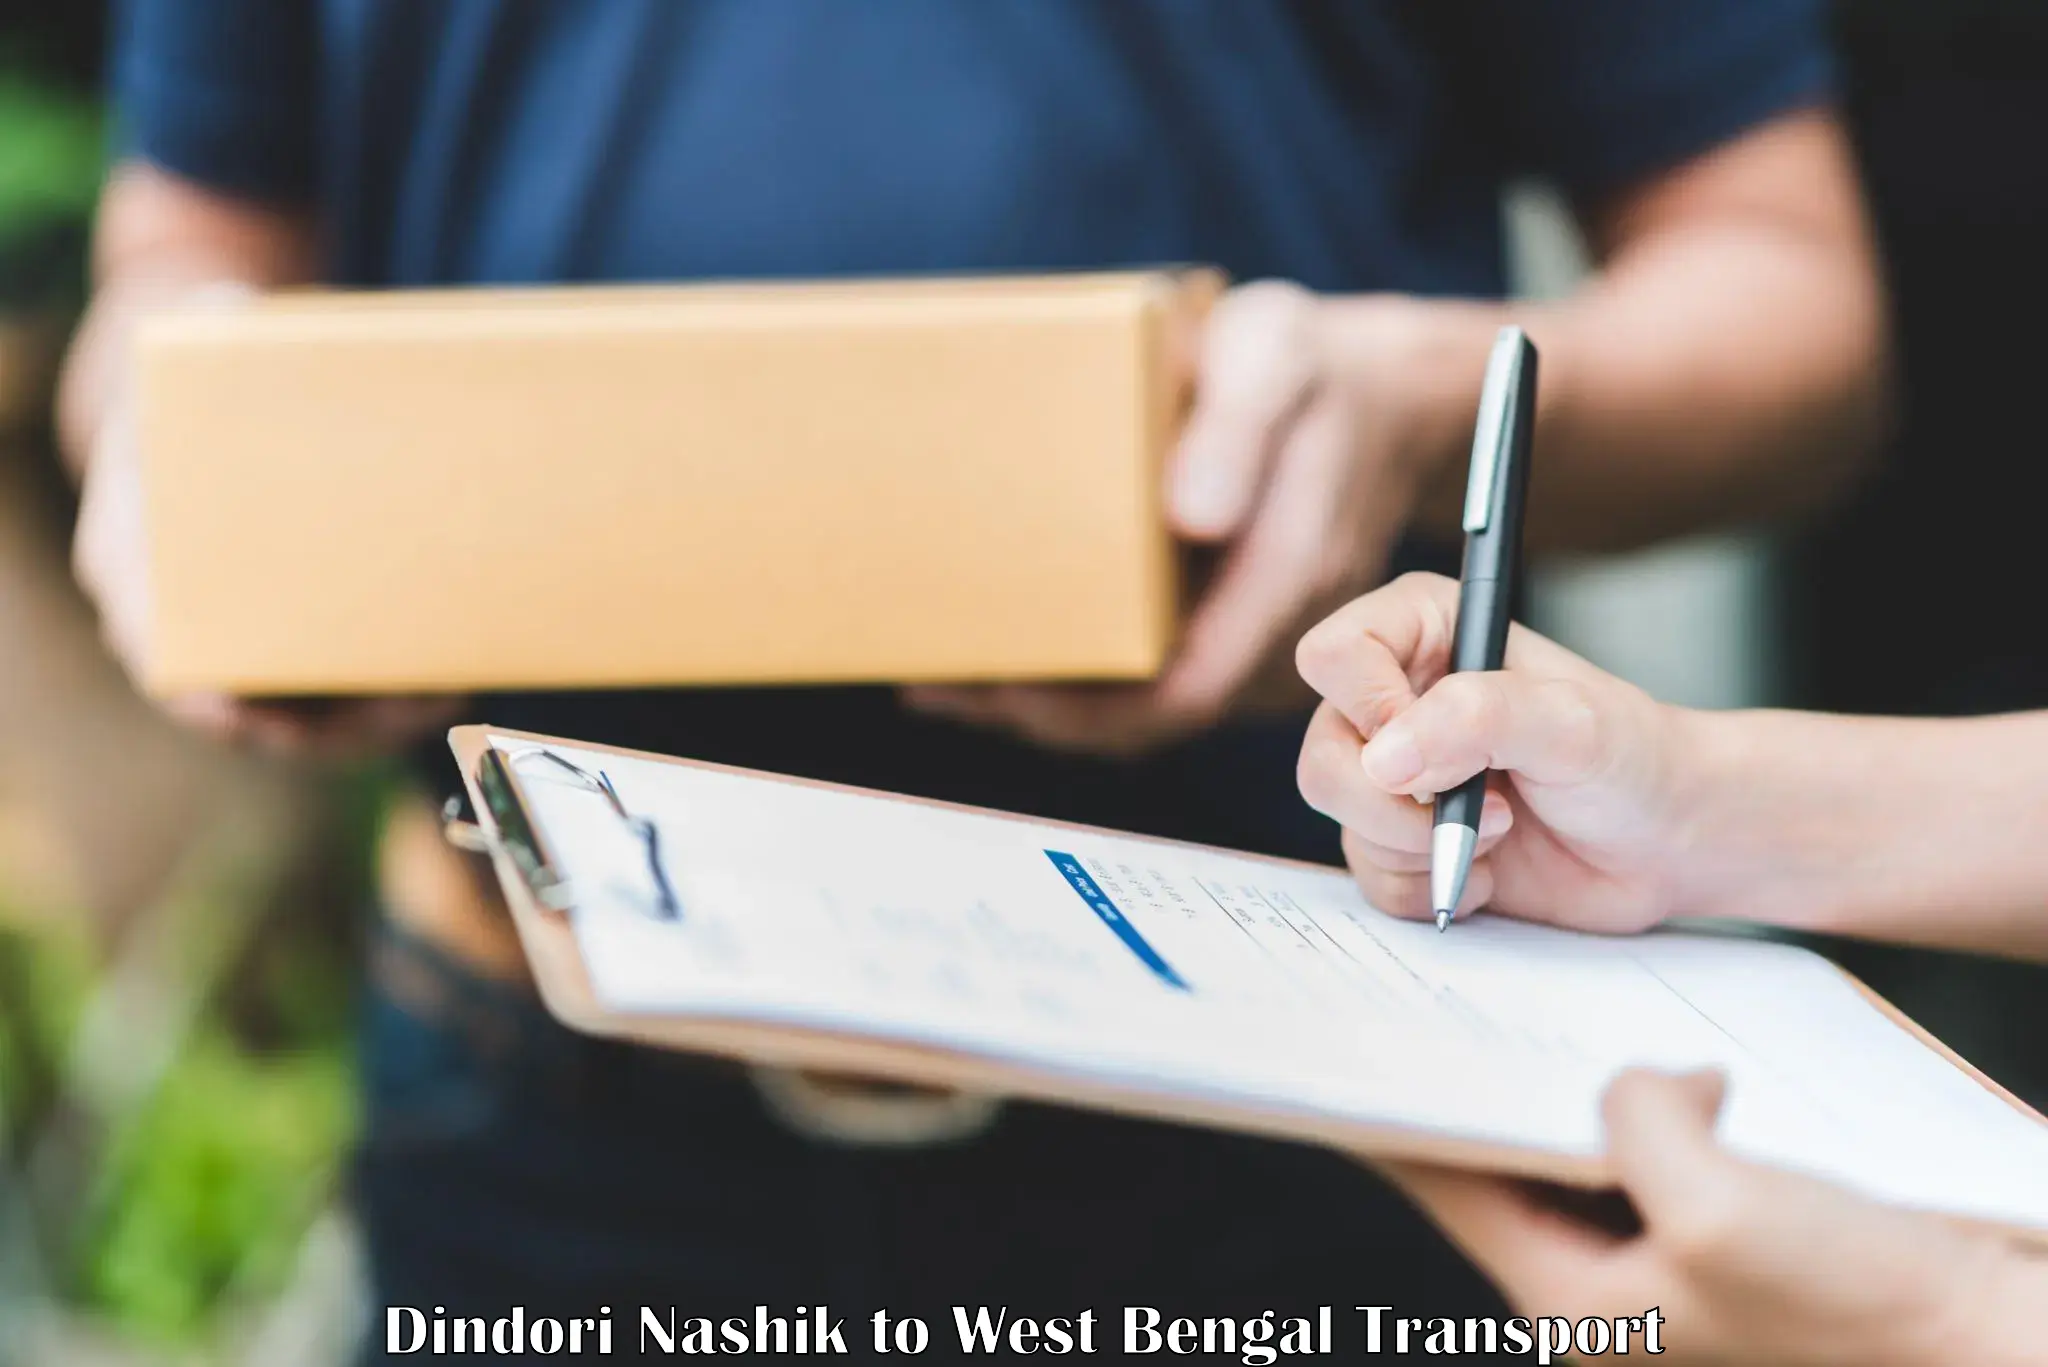 Nationwide transport services Dindori Nashik to Kolkata Port